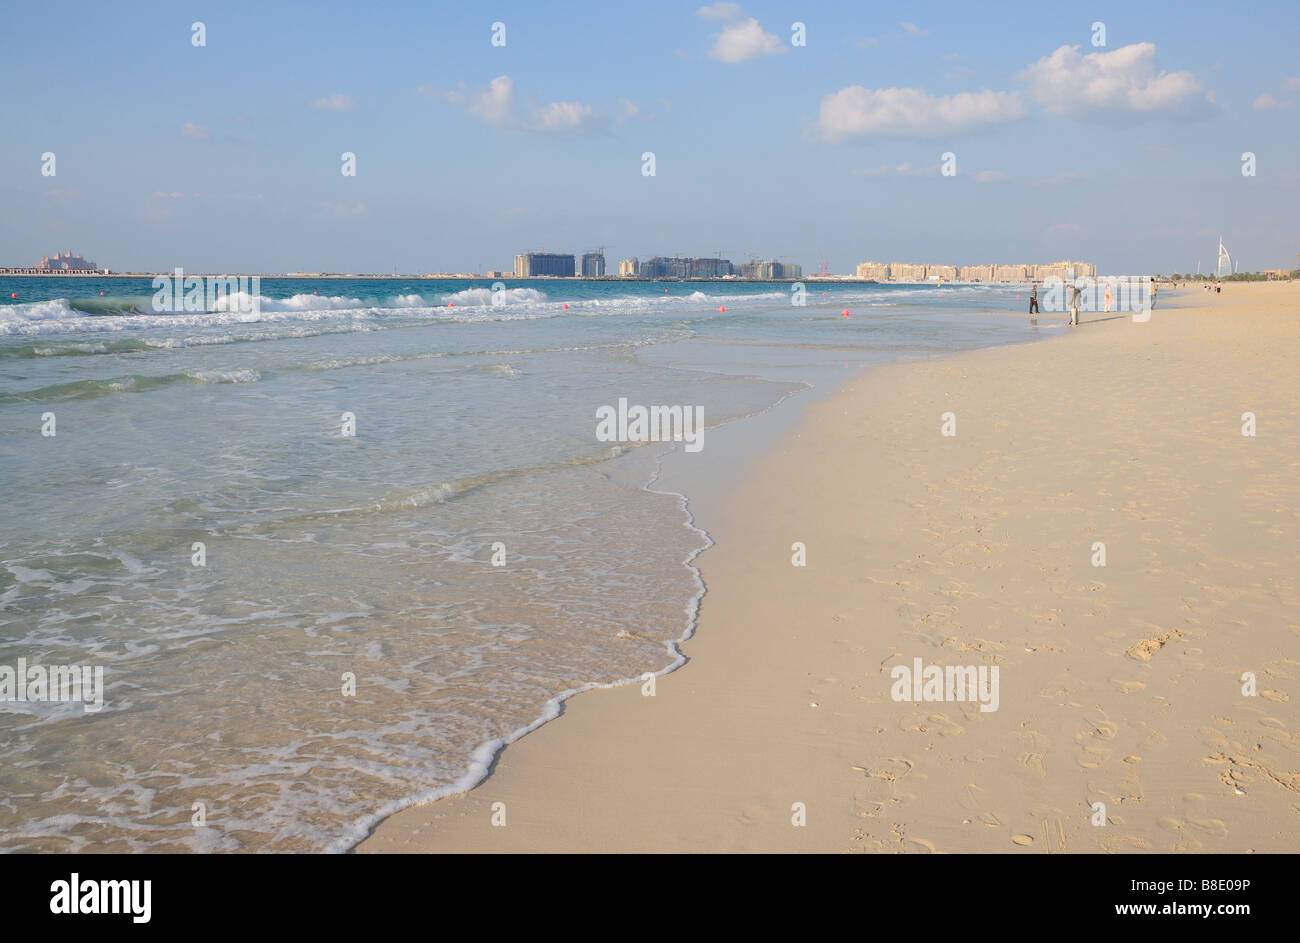 Jumeirah beach in Dubai, United Arab Emirates Stock Photo